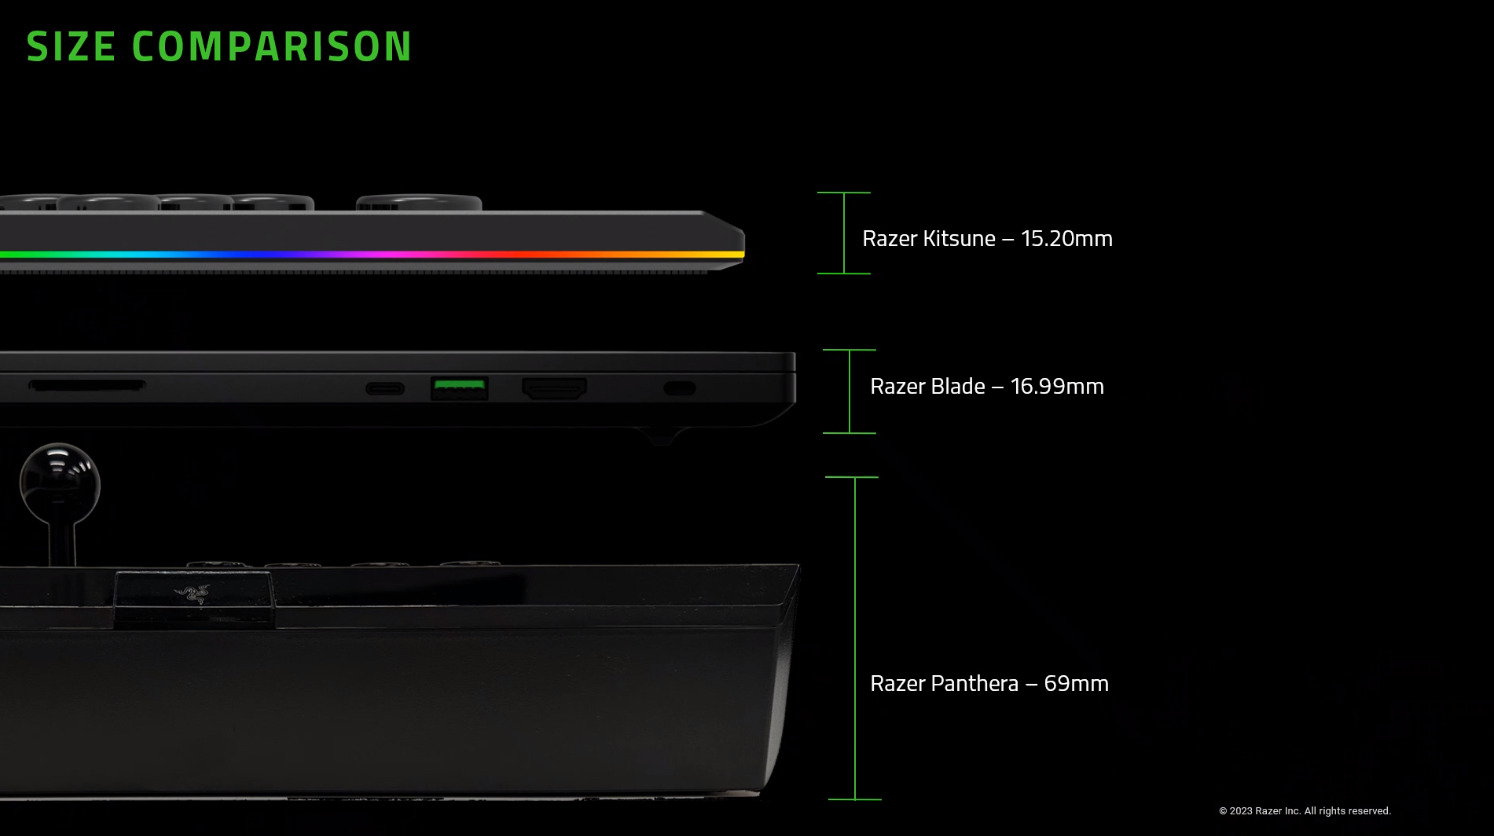 Razer Kitsune review – a new hitbox controller paradigm